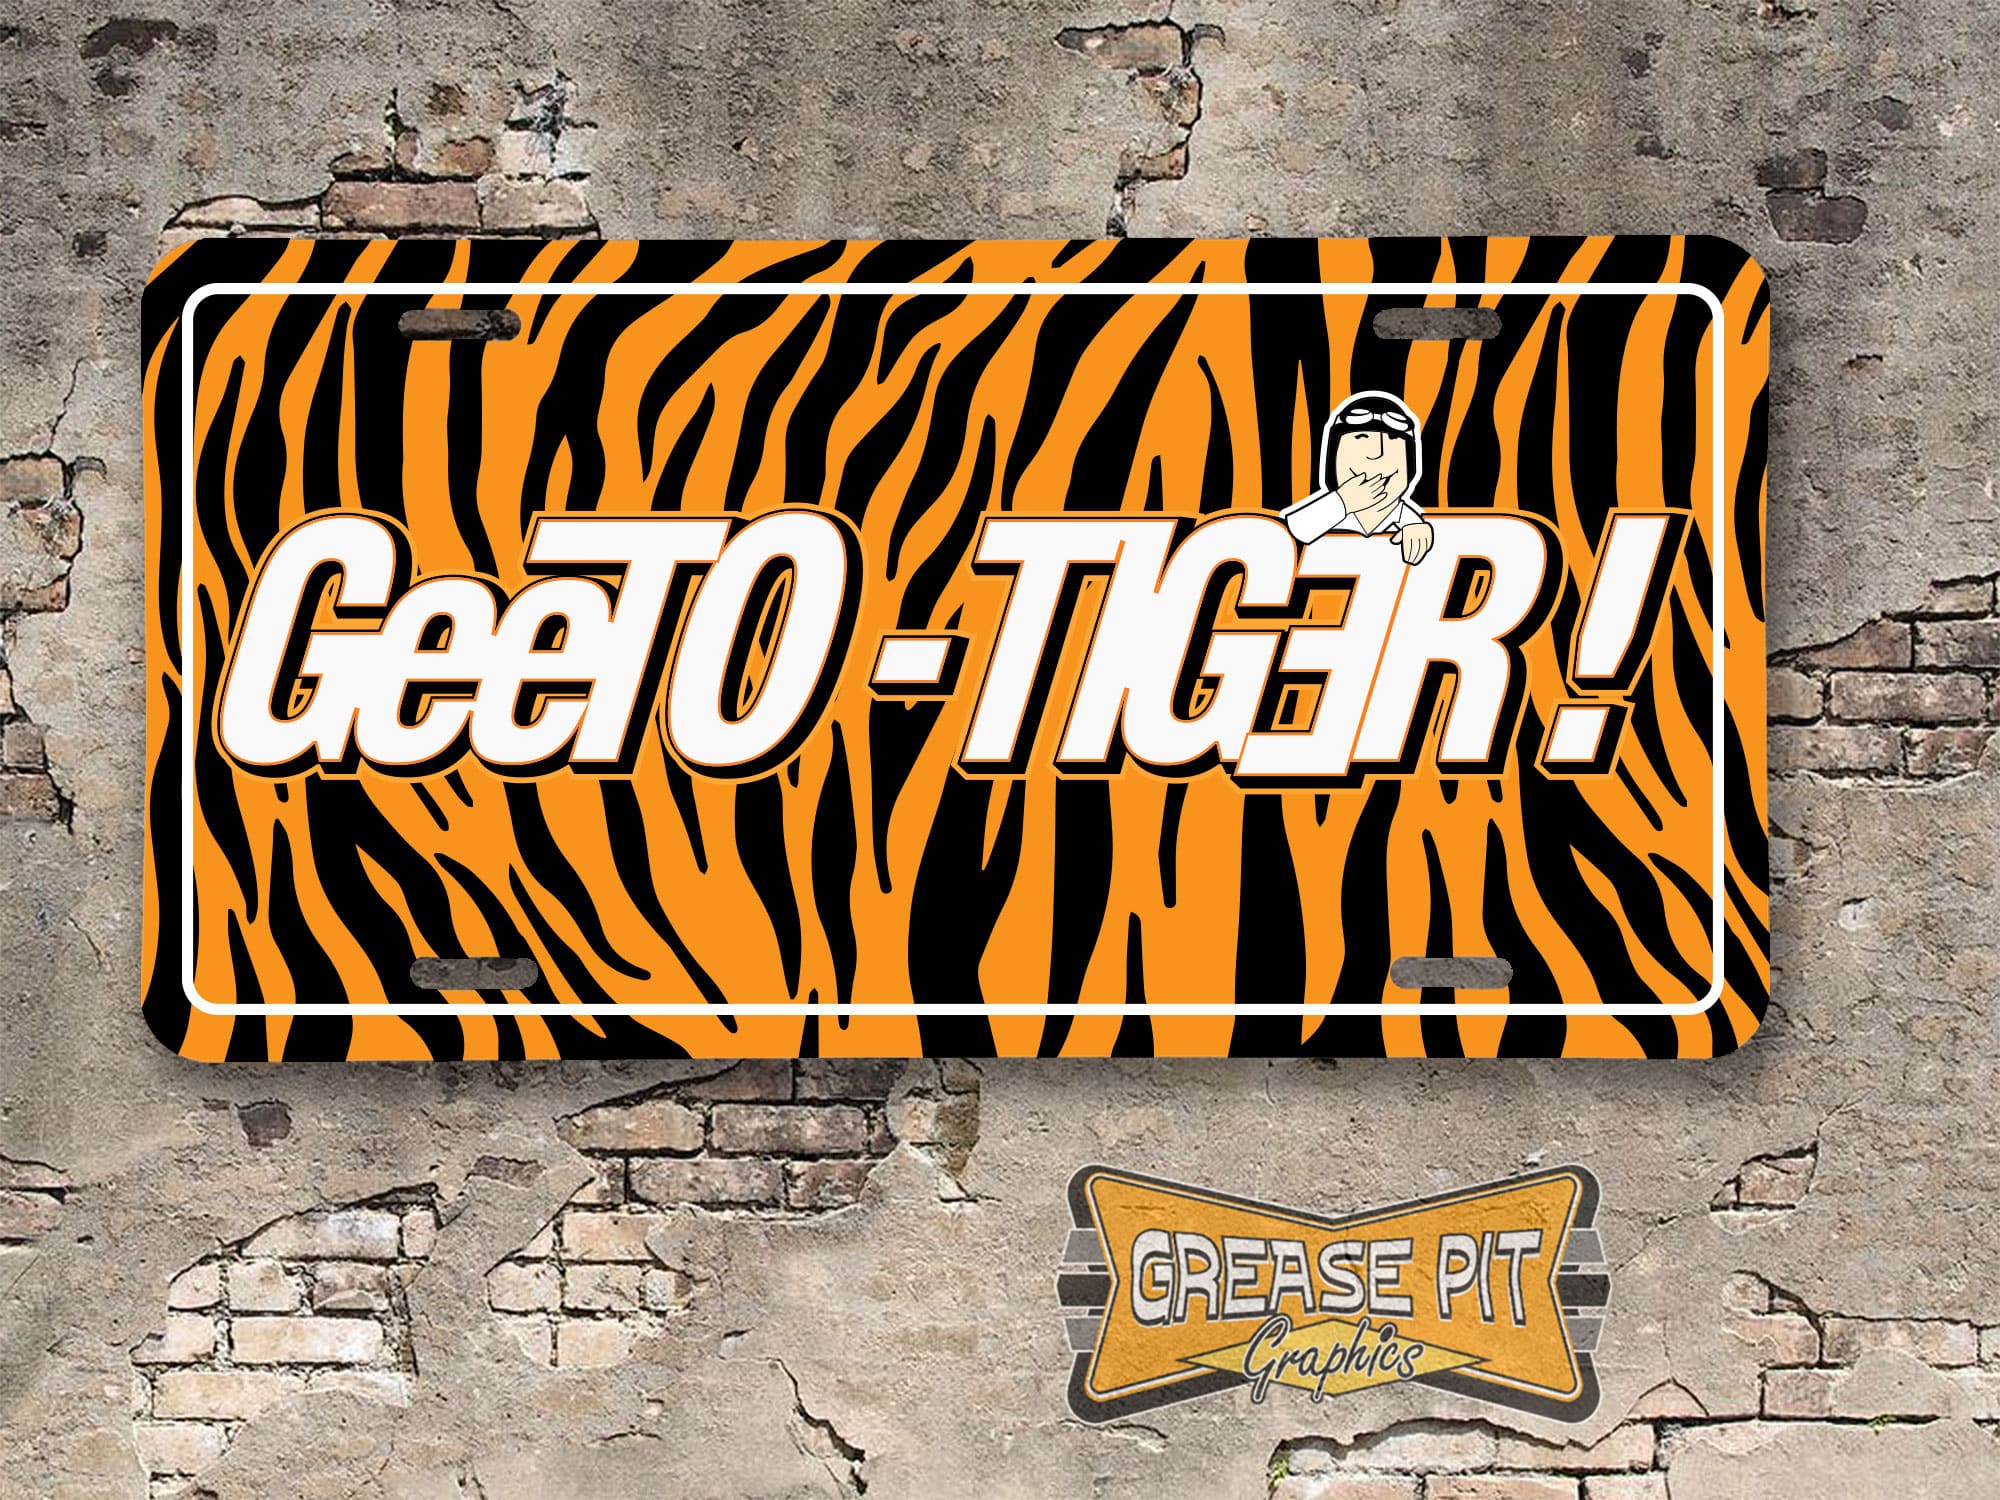 Ace Wilsons Royal Pontiac GeeTO TIGER GTO Booster License Plate orange tiger stripes